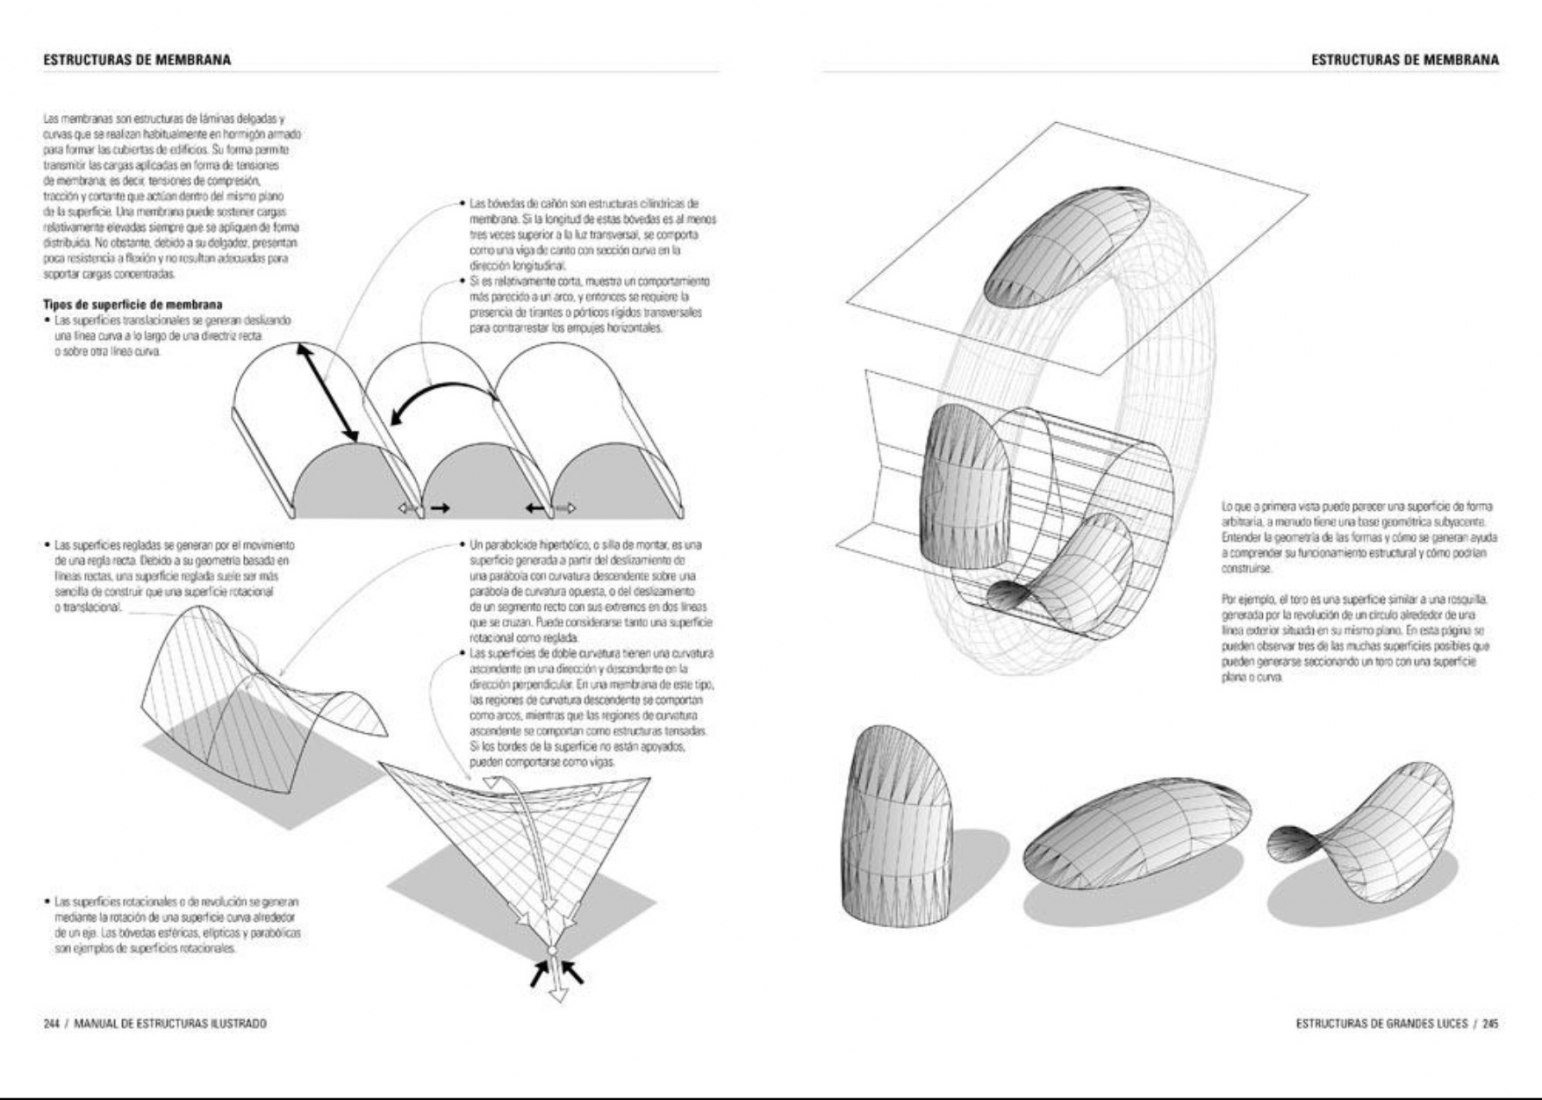 Interior page. Manual de estructuras ilustrado. Francis D. K. Ching, Barry S. Onouye, Douglas Zuberbuhler. Courtesy of Gustavo Gili.